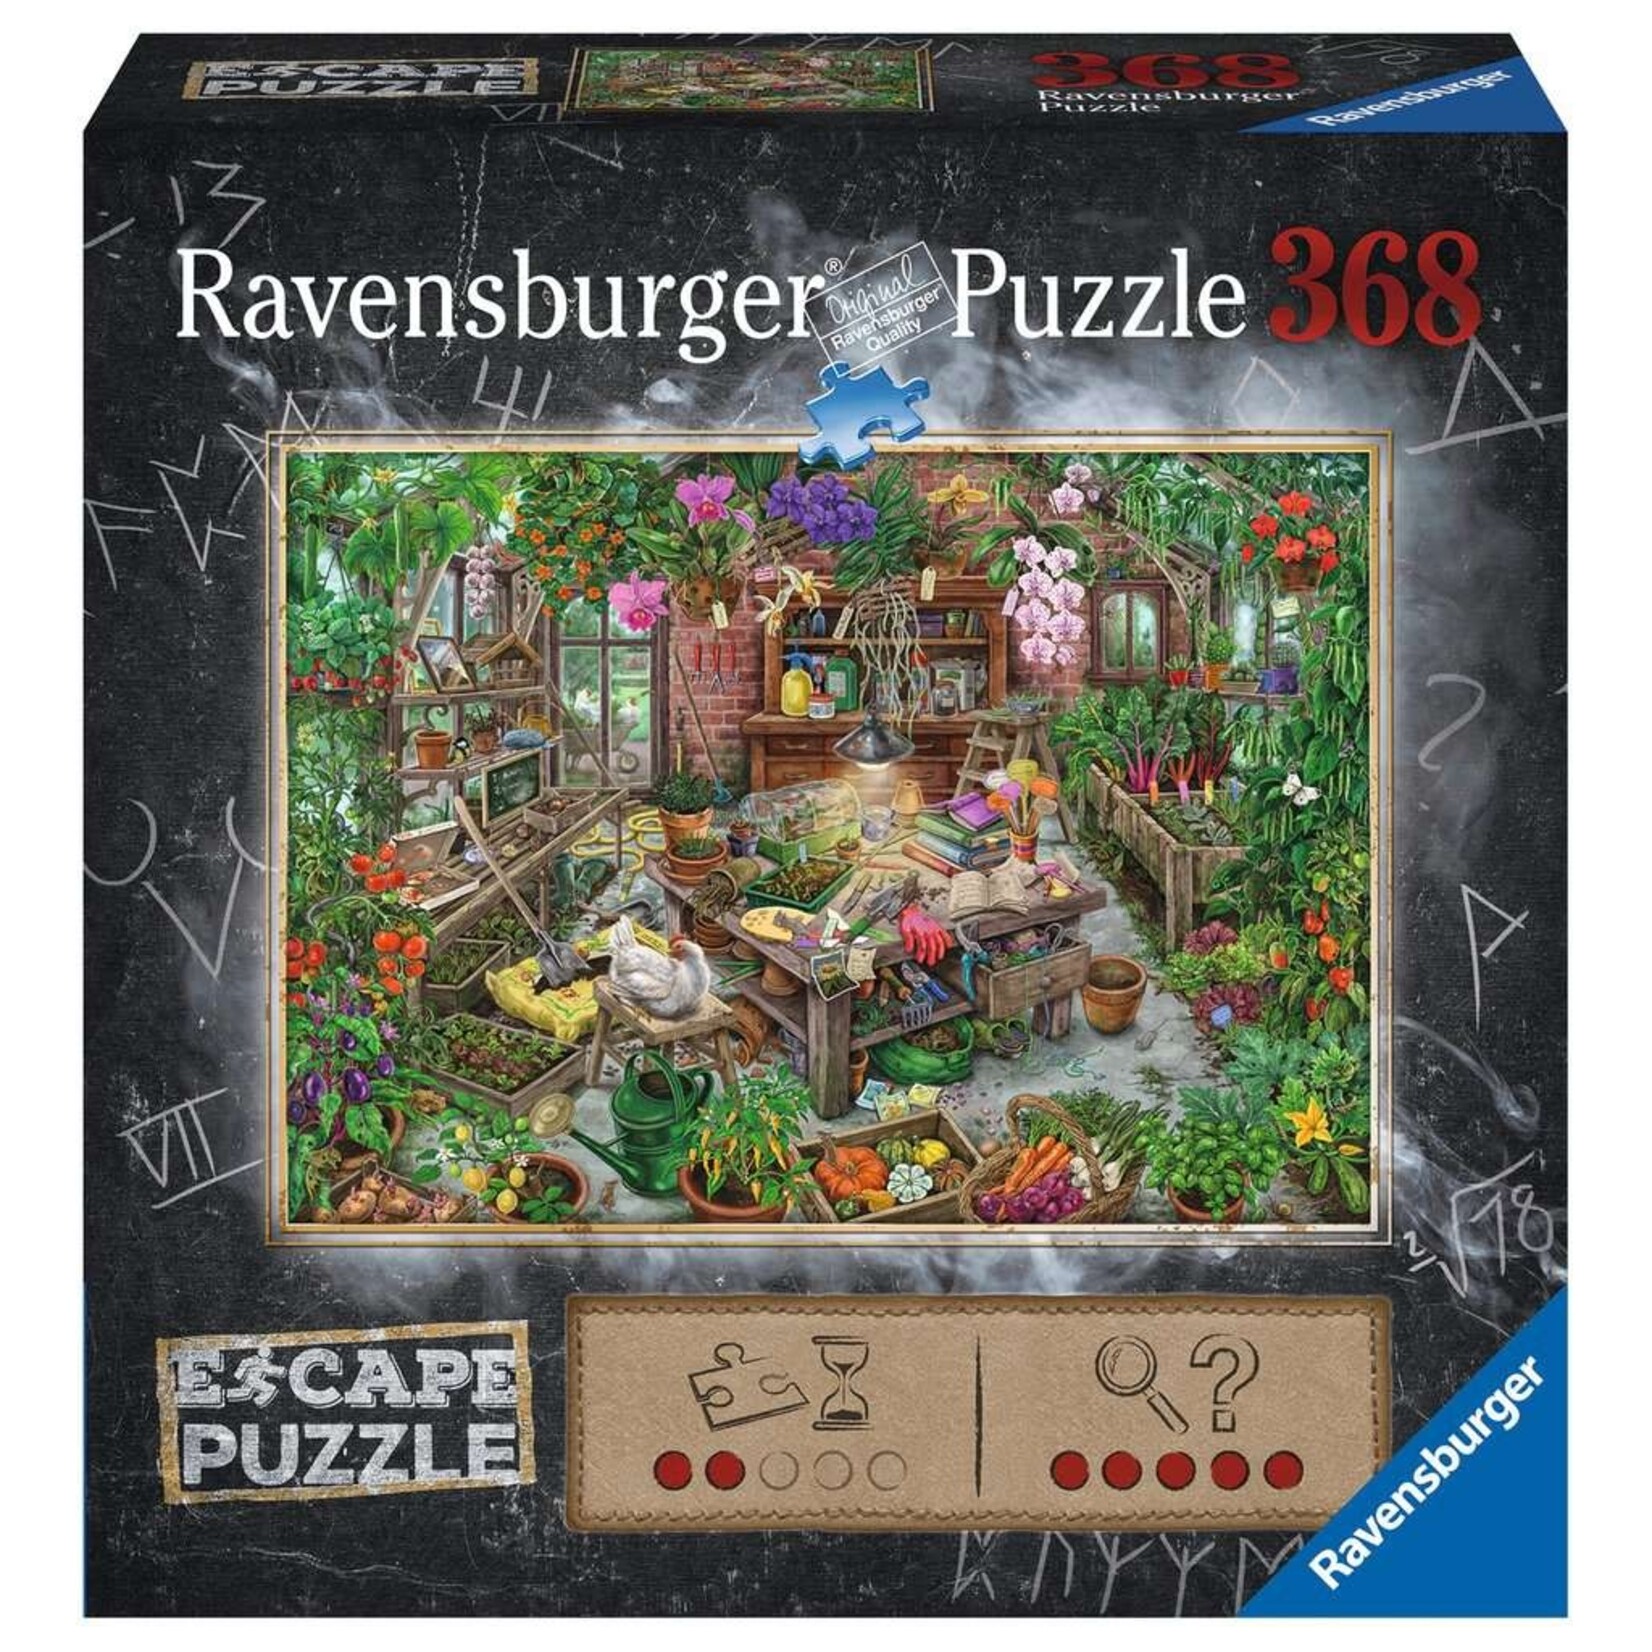 Ravensburger RAV16530 Escape Puzzle The Green House (Puzzle368)